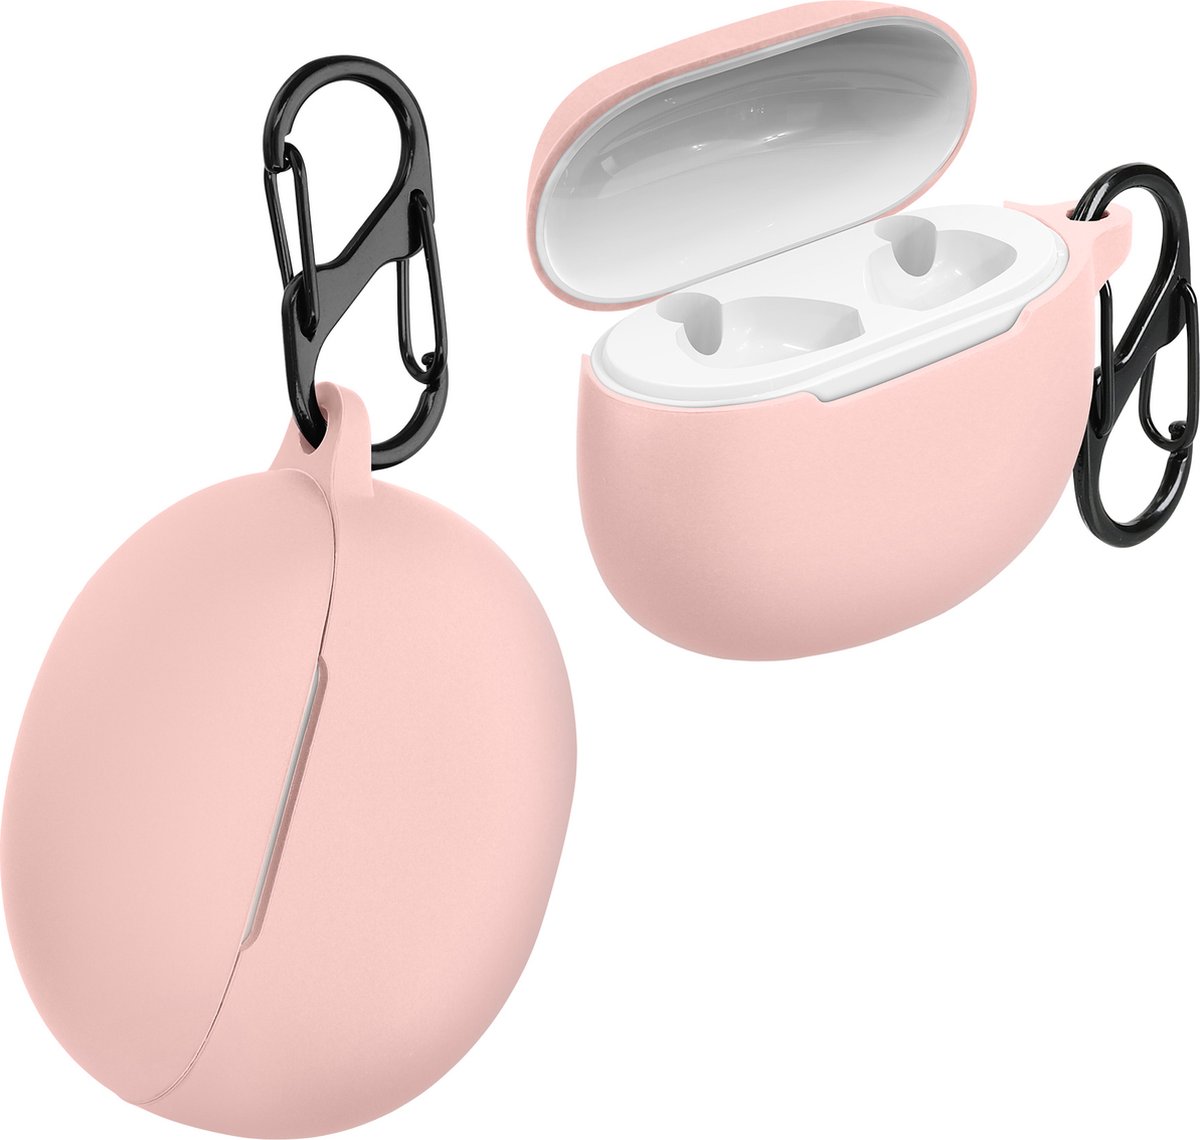 kwmobile Hoes voor Oppo Enco Air / Enco Air W32 - Siliconen cover voor oordopjes in roze